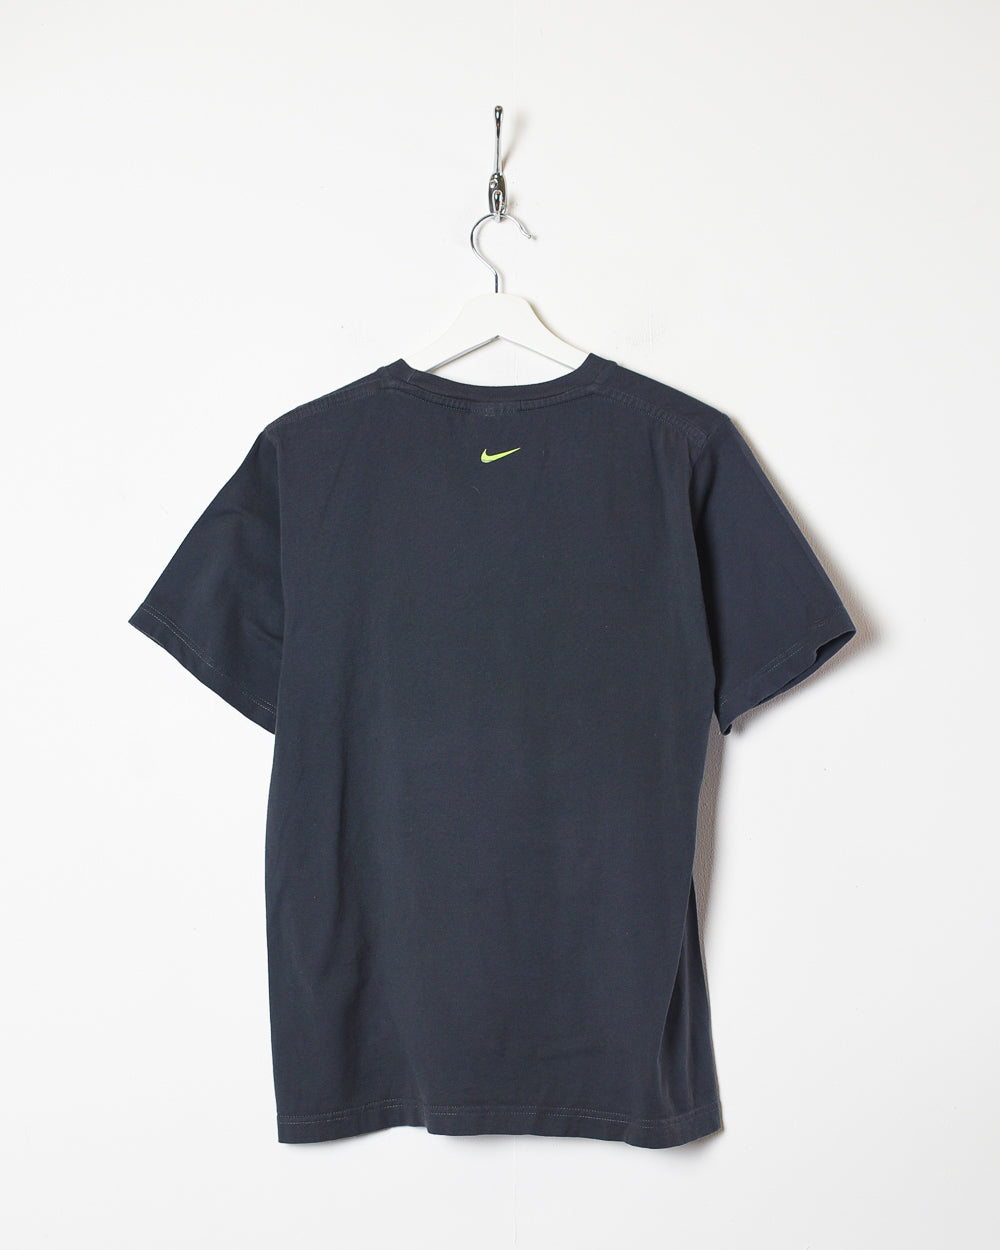 Grey Nike T-Shirt - Small